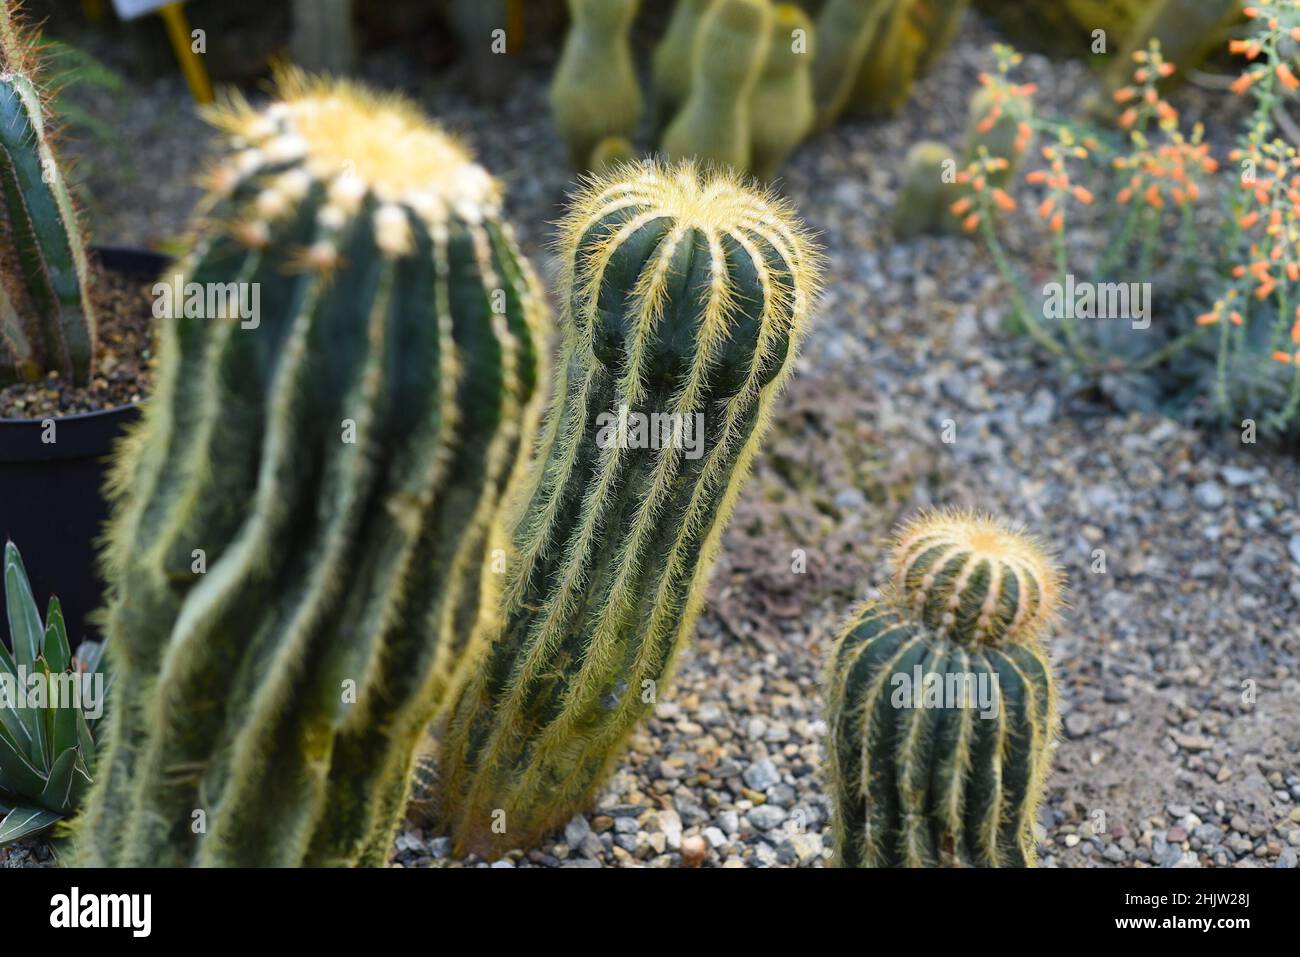 Parodia magnifica or Eriocactus magnificus cactuses without flowers Stock Photo